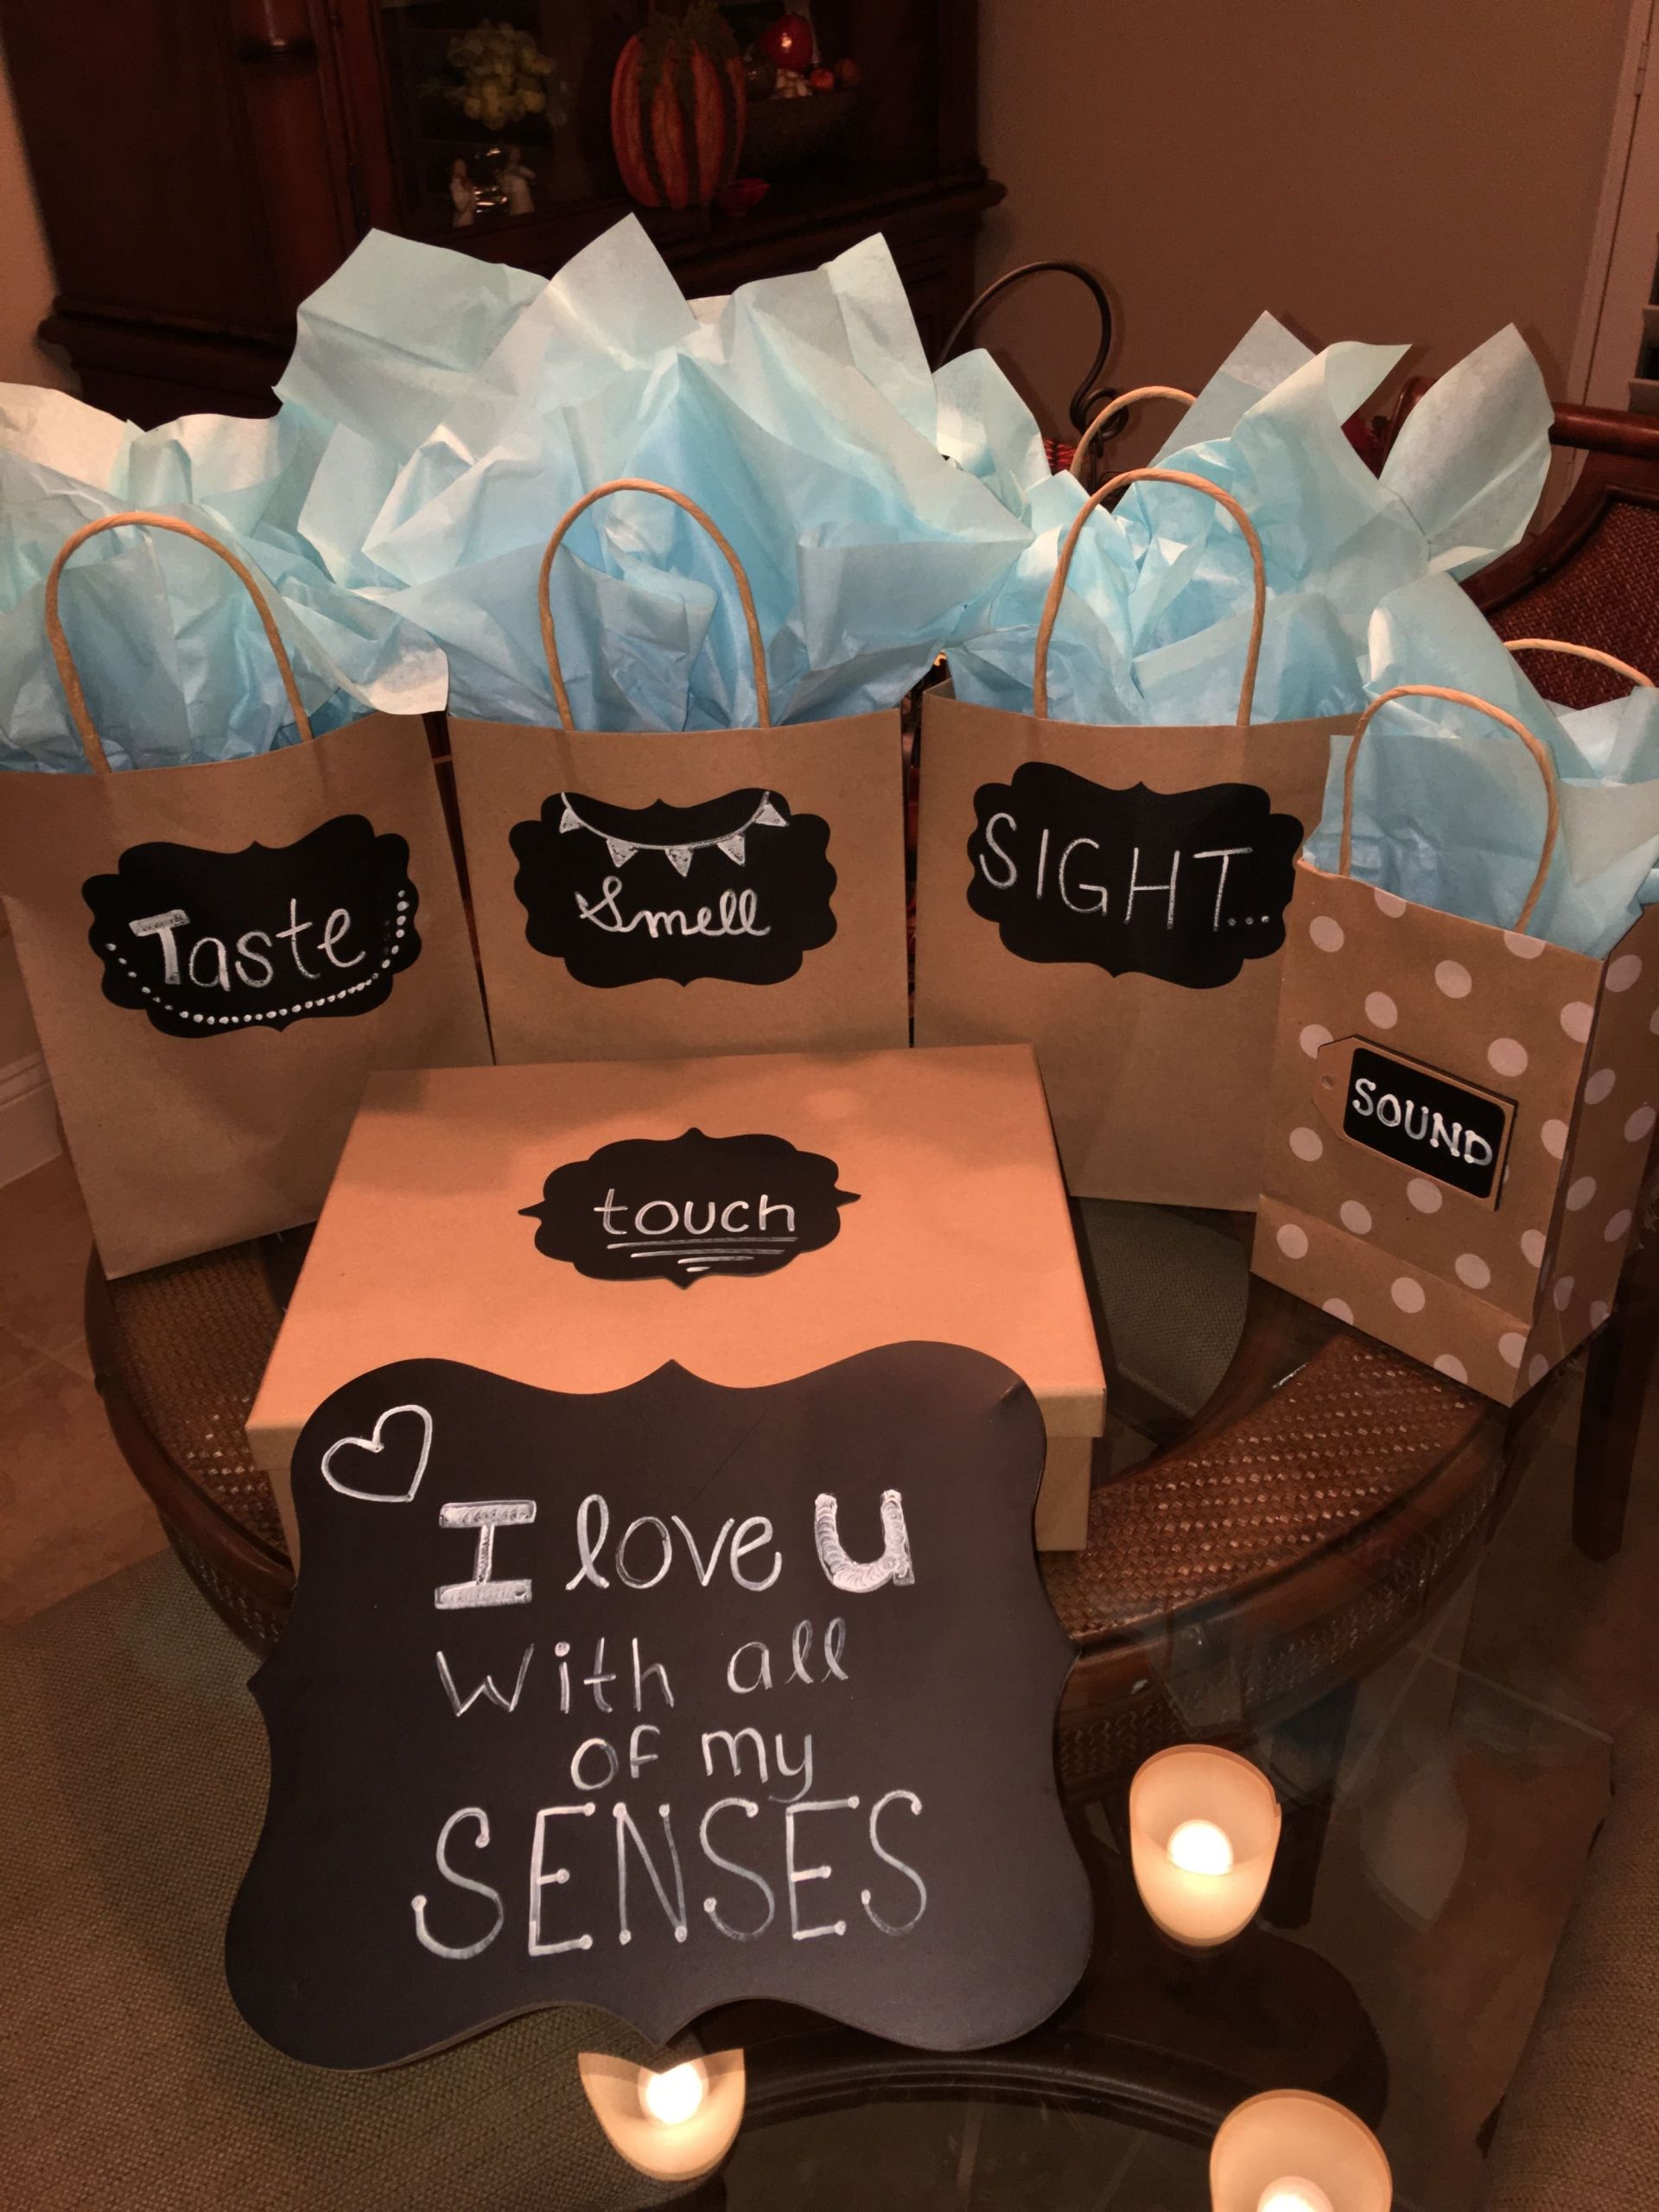 Homemade Gift Ideas Your Boyfriend
 10 Lovable Romantic Birthday Gift Ideas Boyfriend 2020